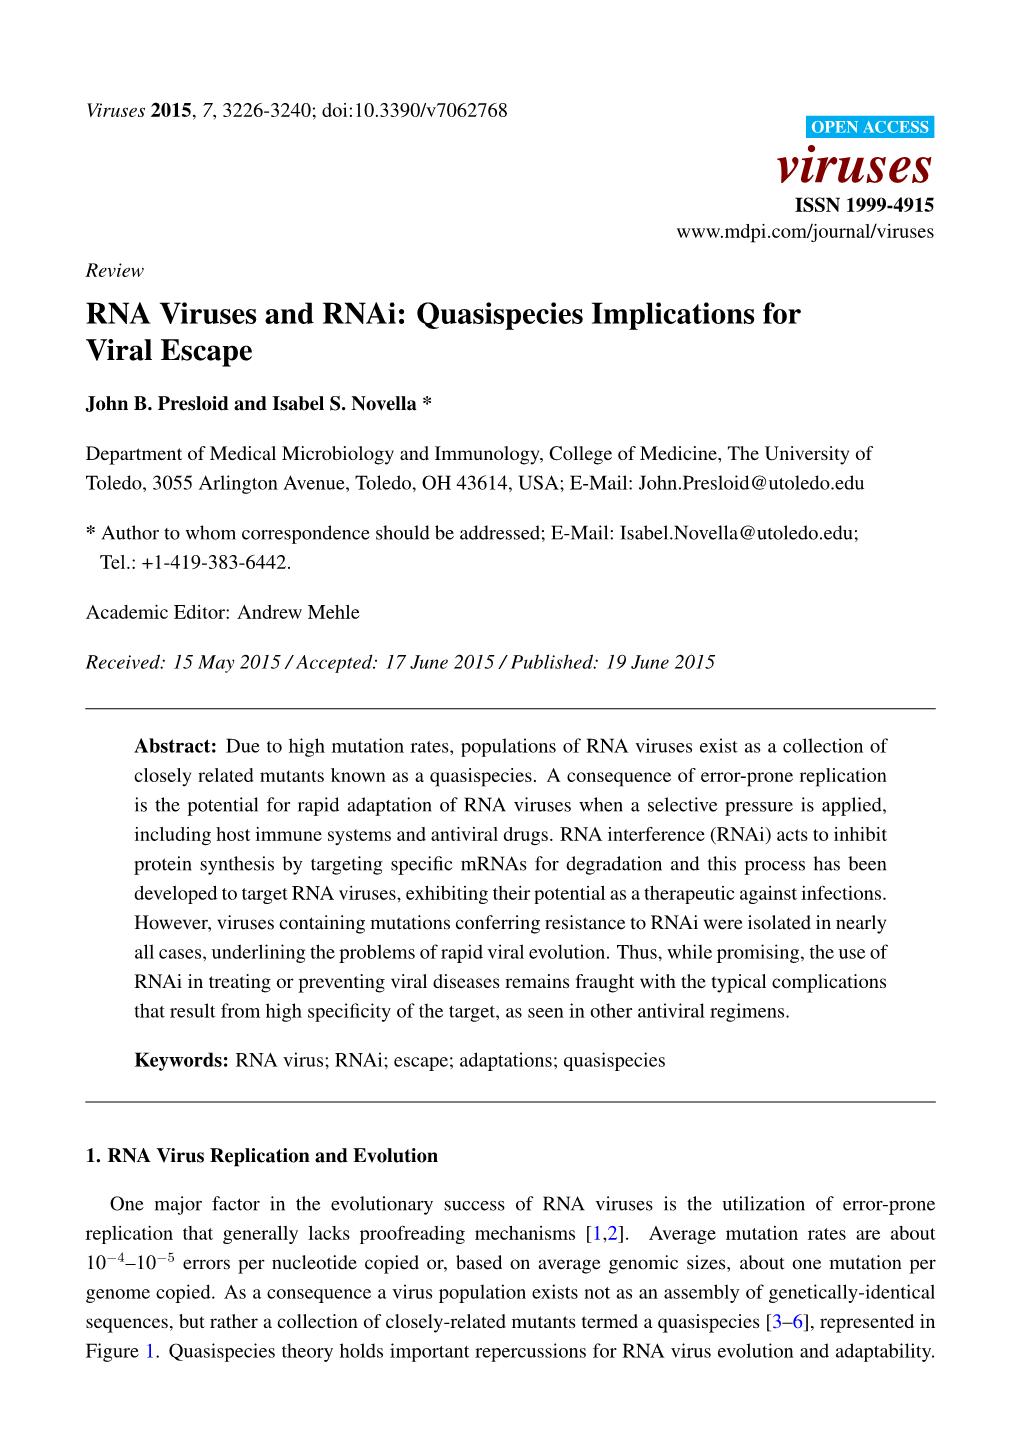 RNA Viruses and Rnai: Quasispecies Implications for Viral Escape